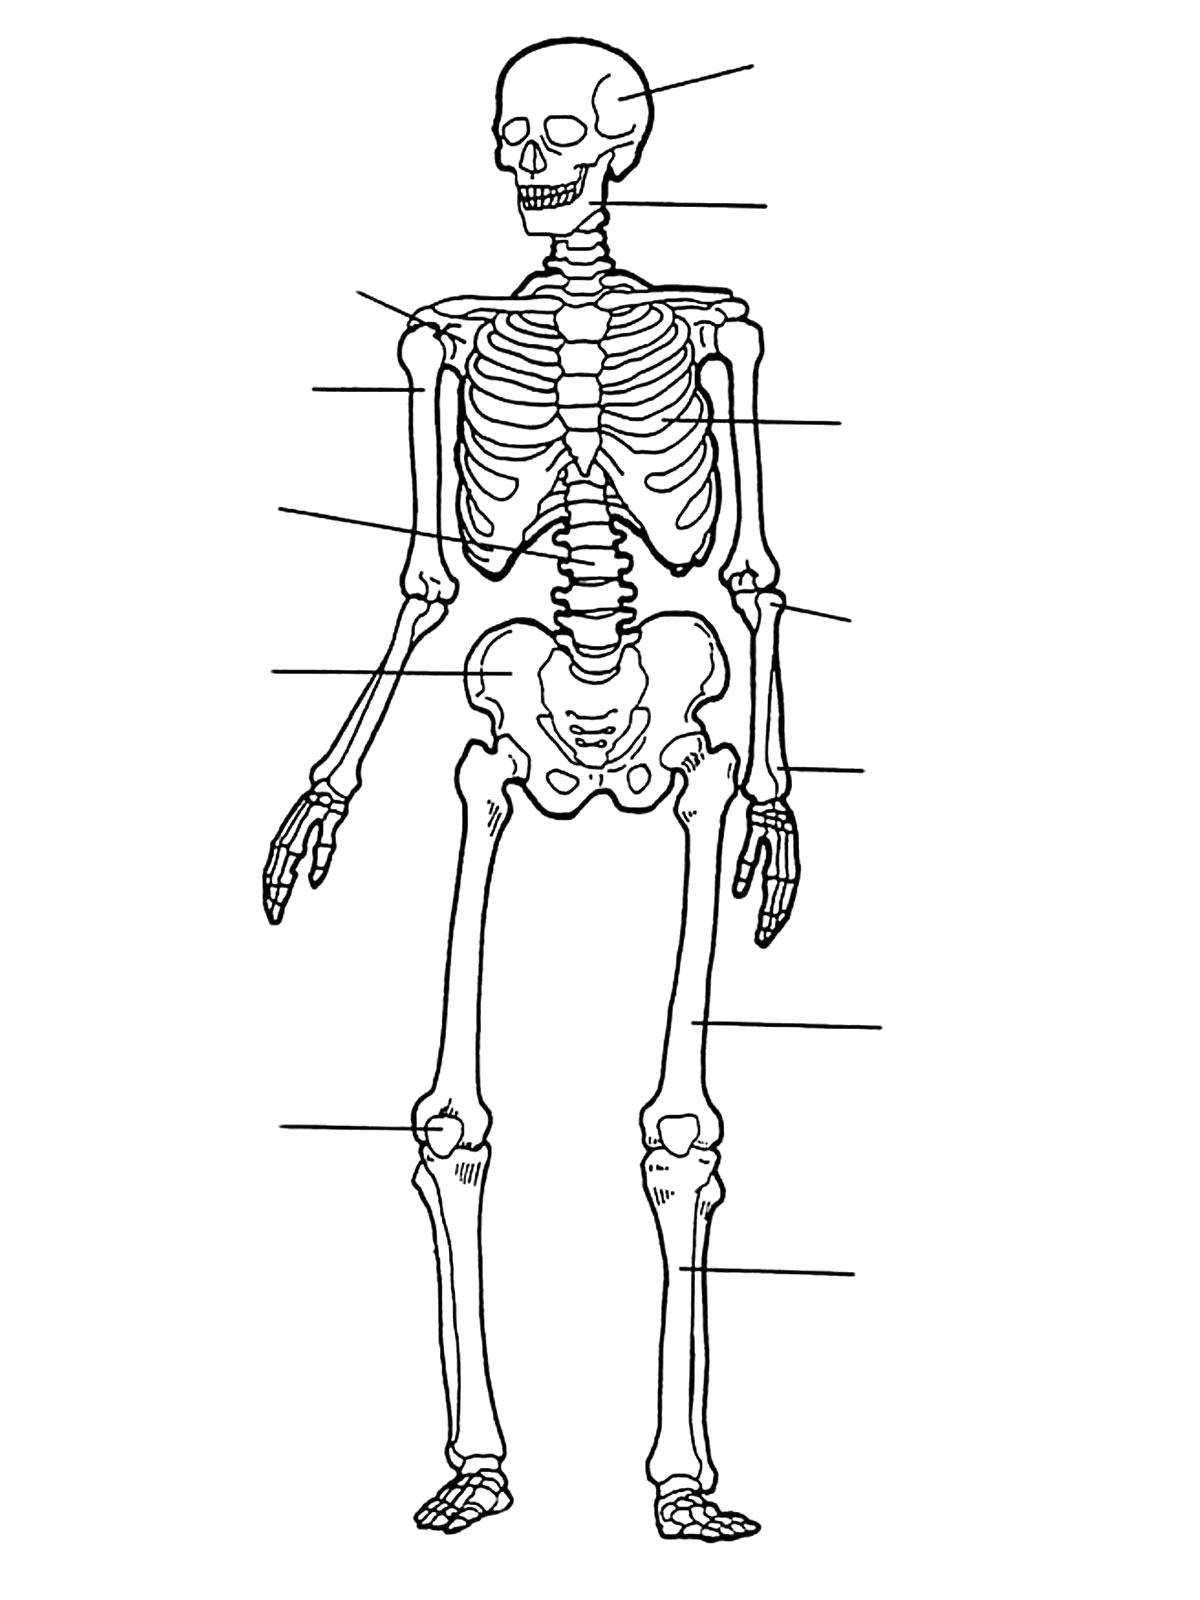 Скелет человека раскраска